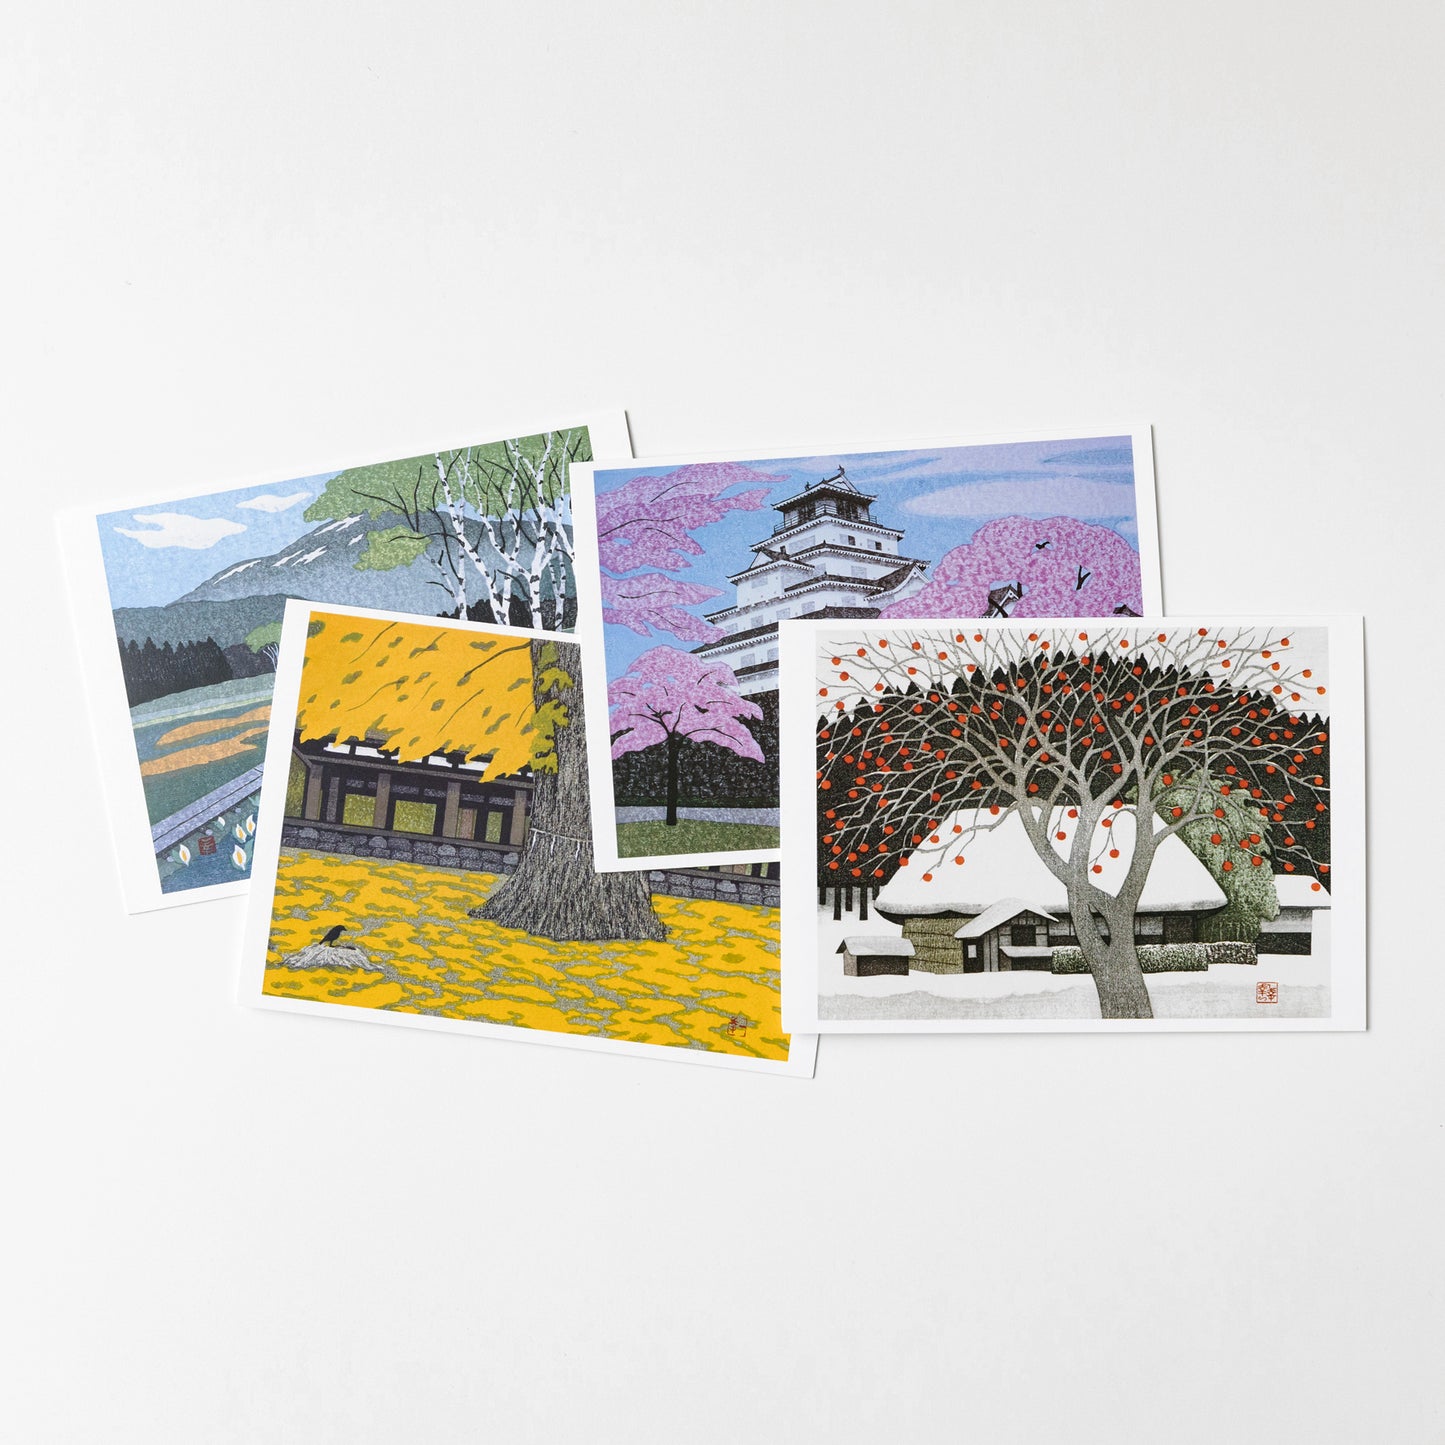 Kazuyuki Ohtsu Seasons Notecards